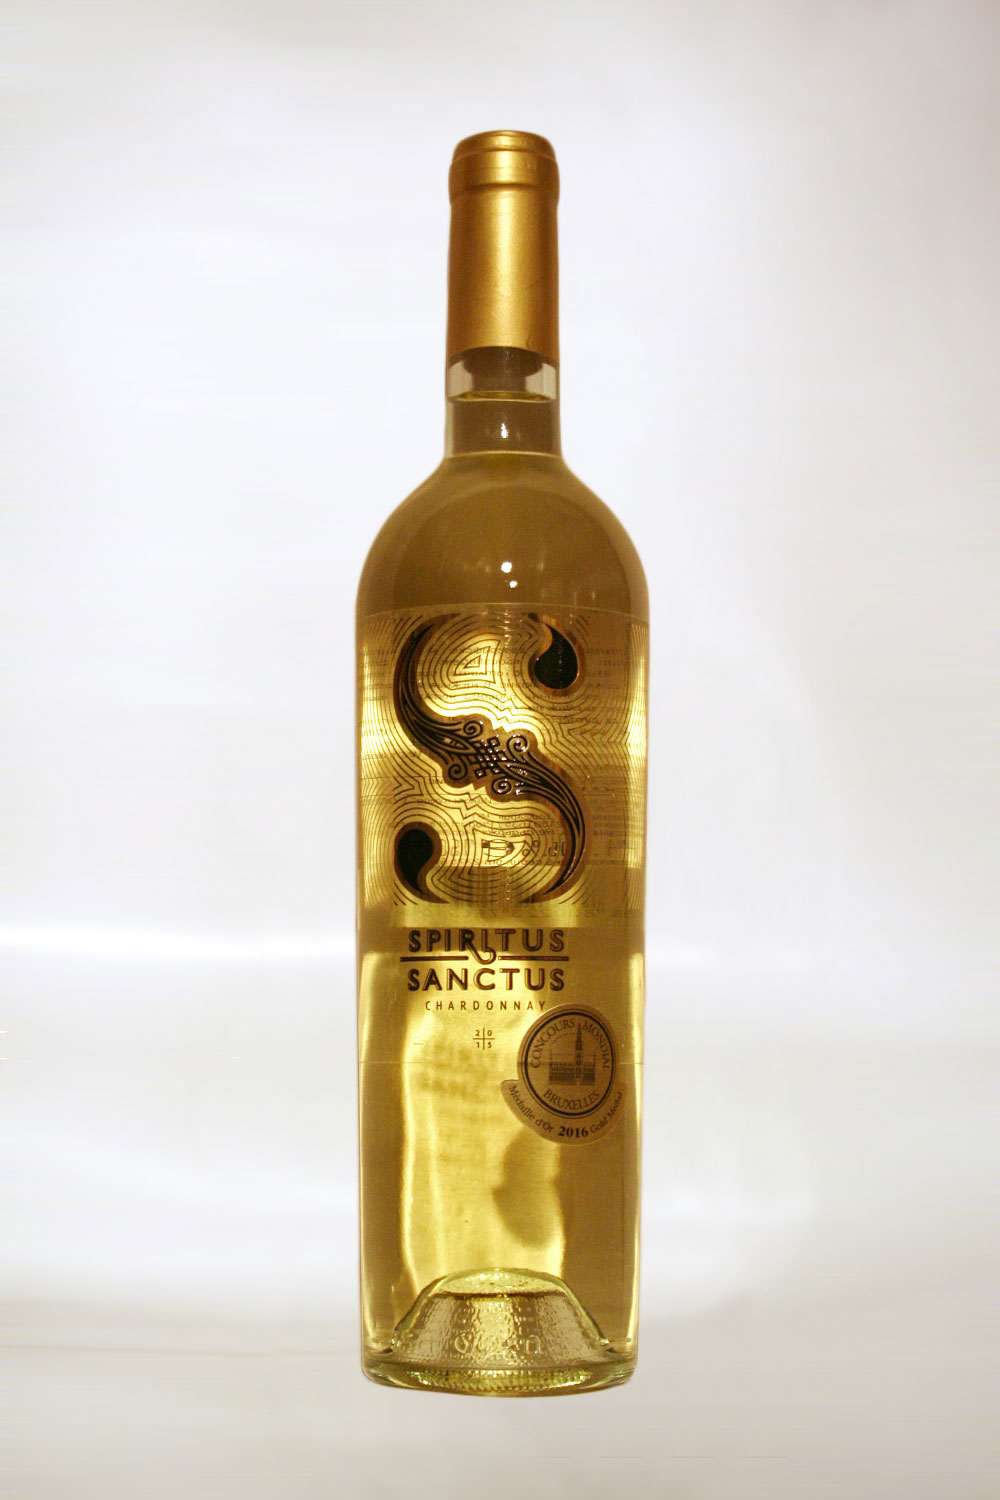 Spiritus Sanctus Chardonnay 2015 - Кликнете на изображението, за да го затворите